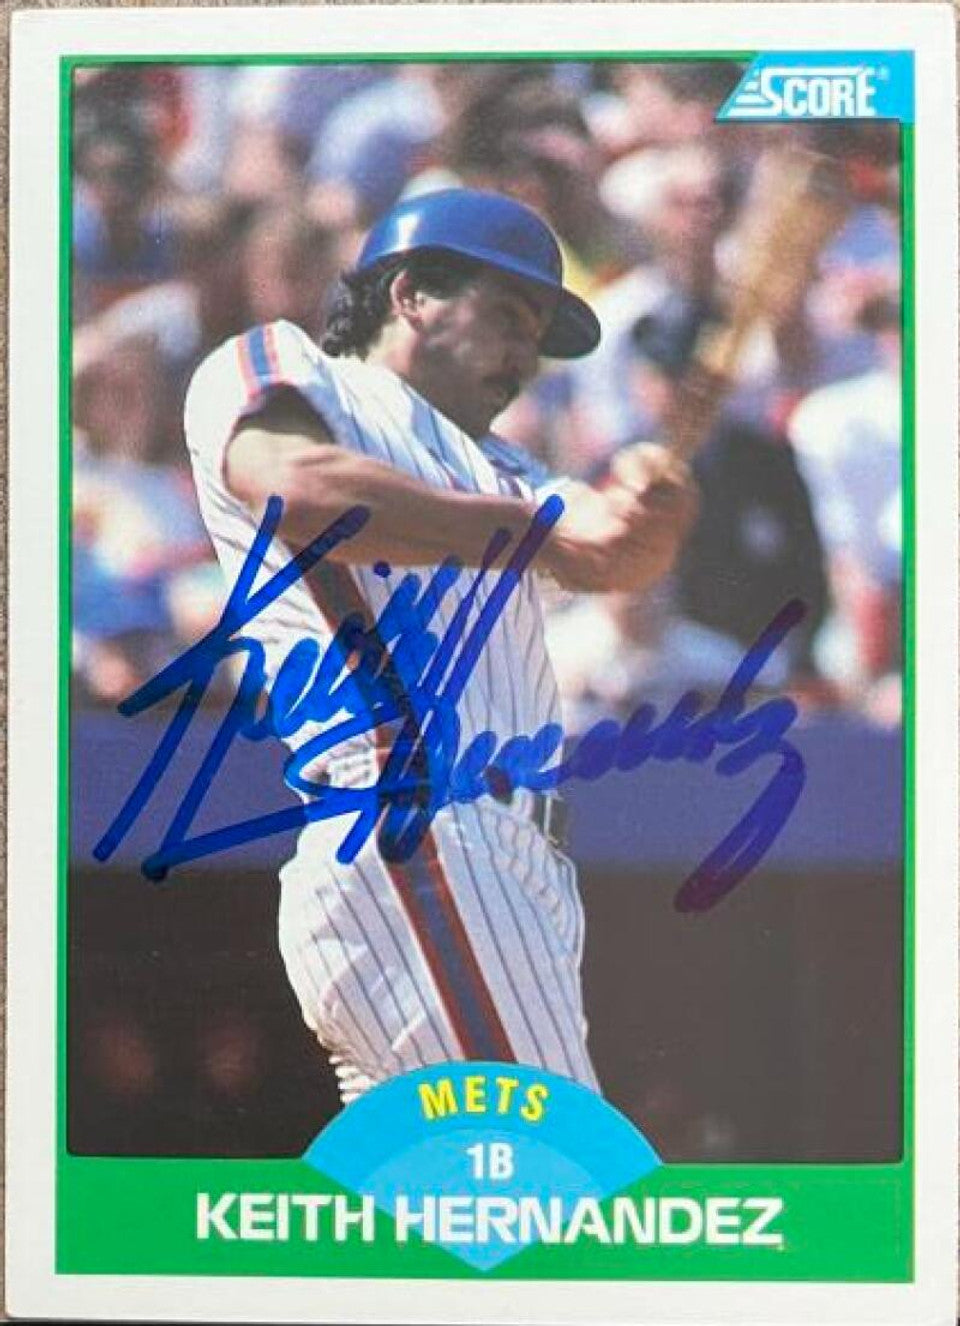 Keith Hernandez Signed 1989 Score Baseball Card - New York Mets